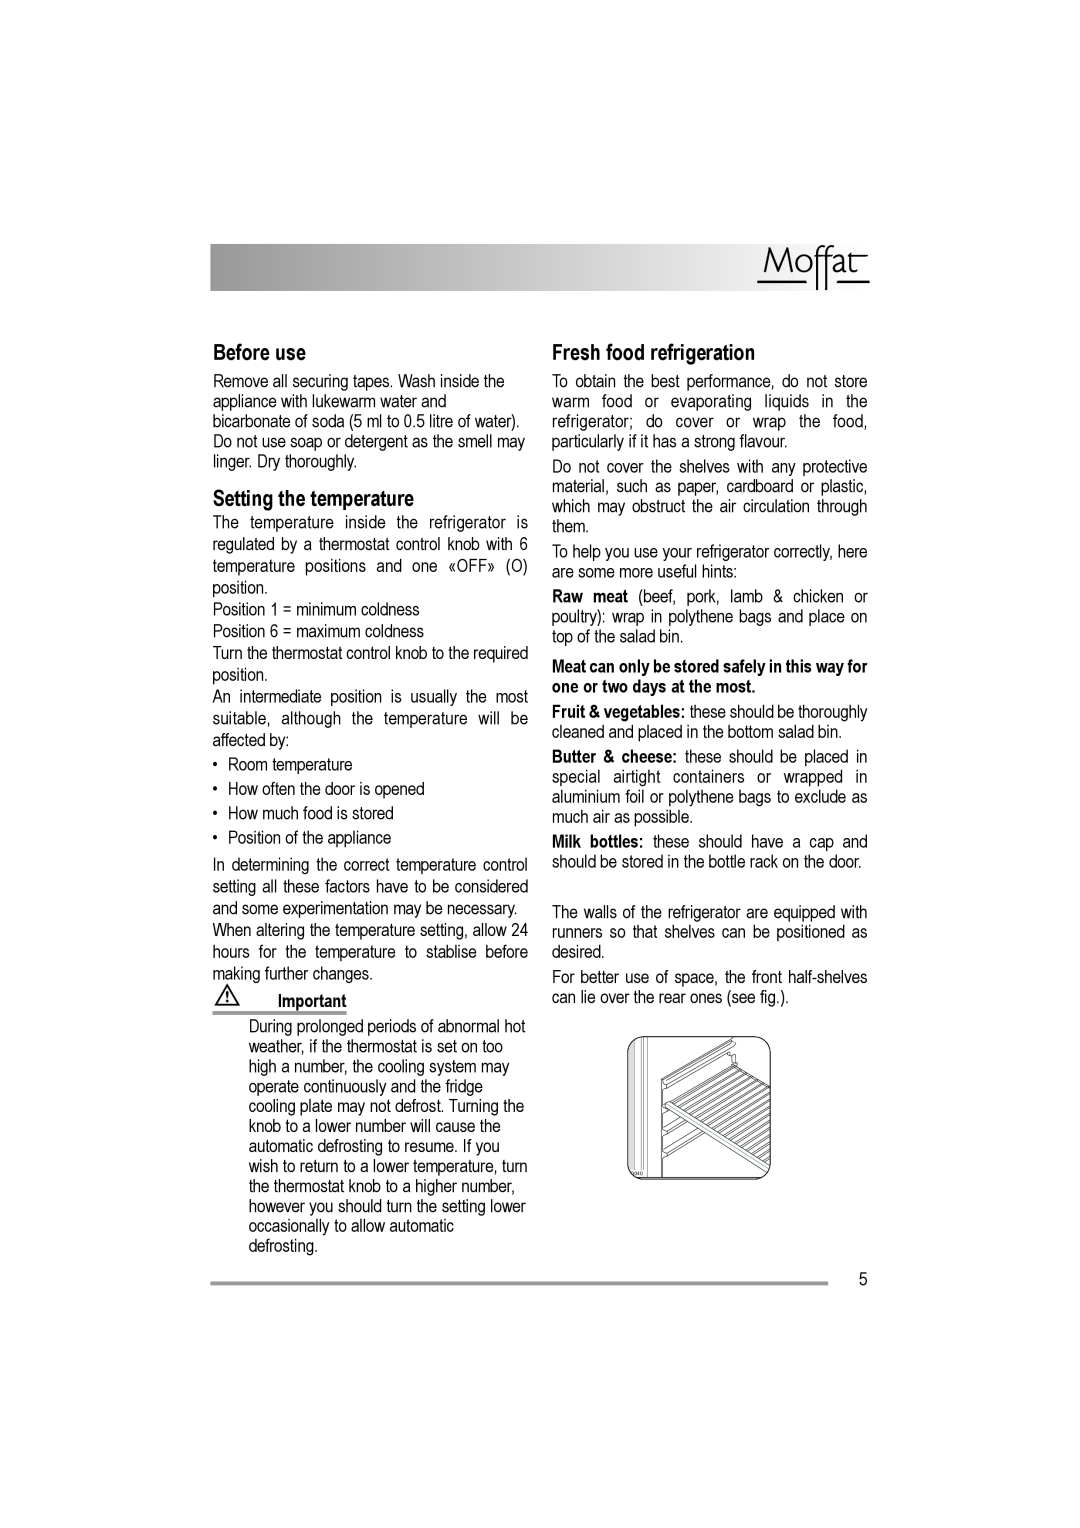 Moffat MUL 514 user manual Before use, Setting the temperature, Fresh food refrigeration 